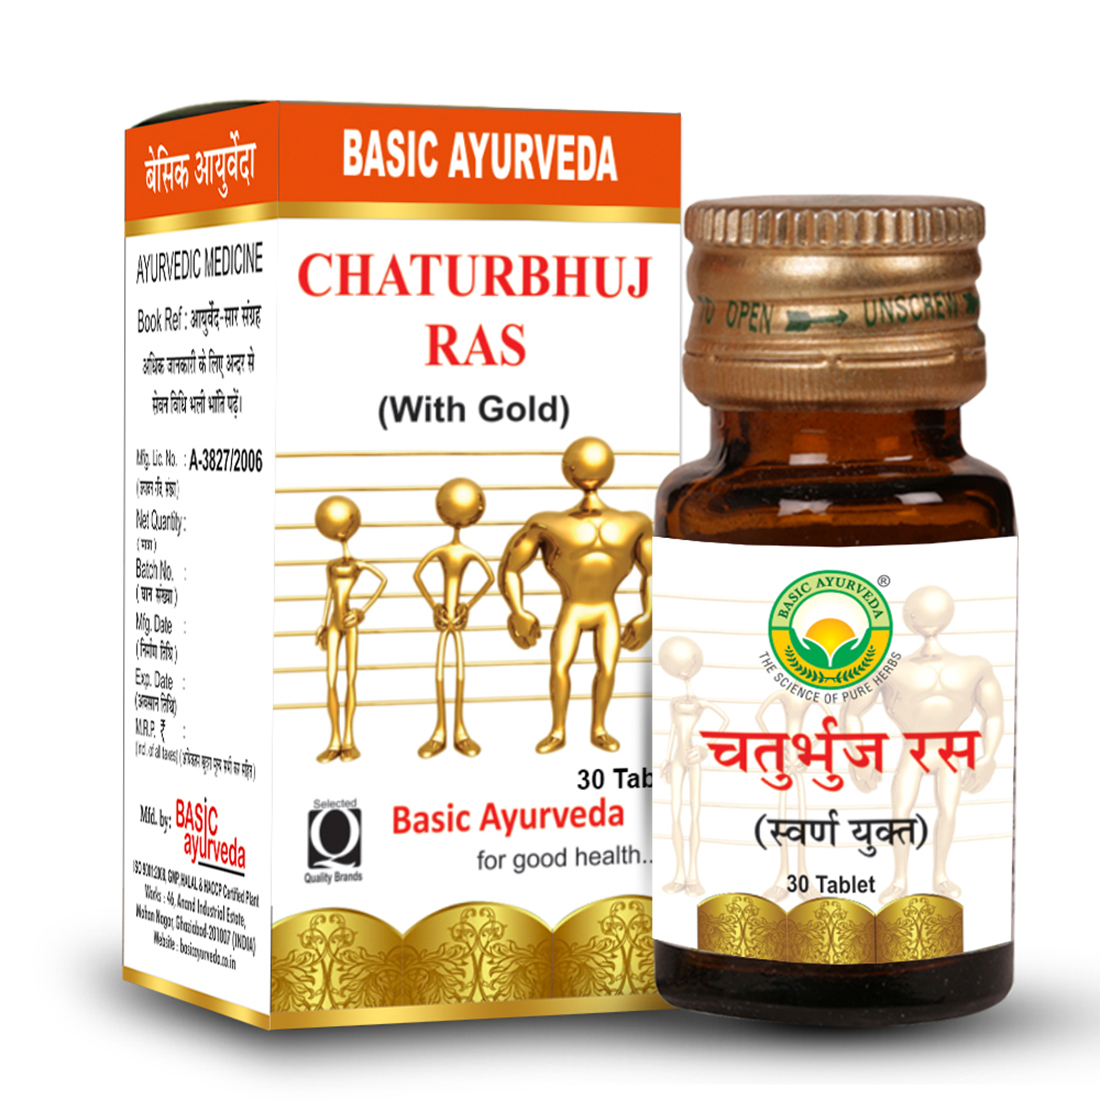 Chaturbhuj Ras